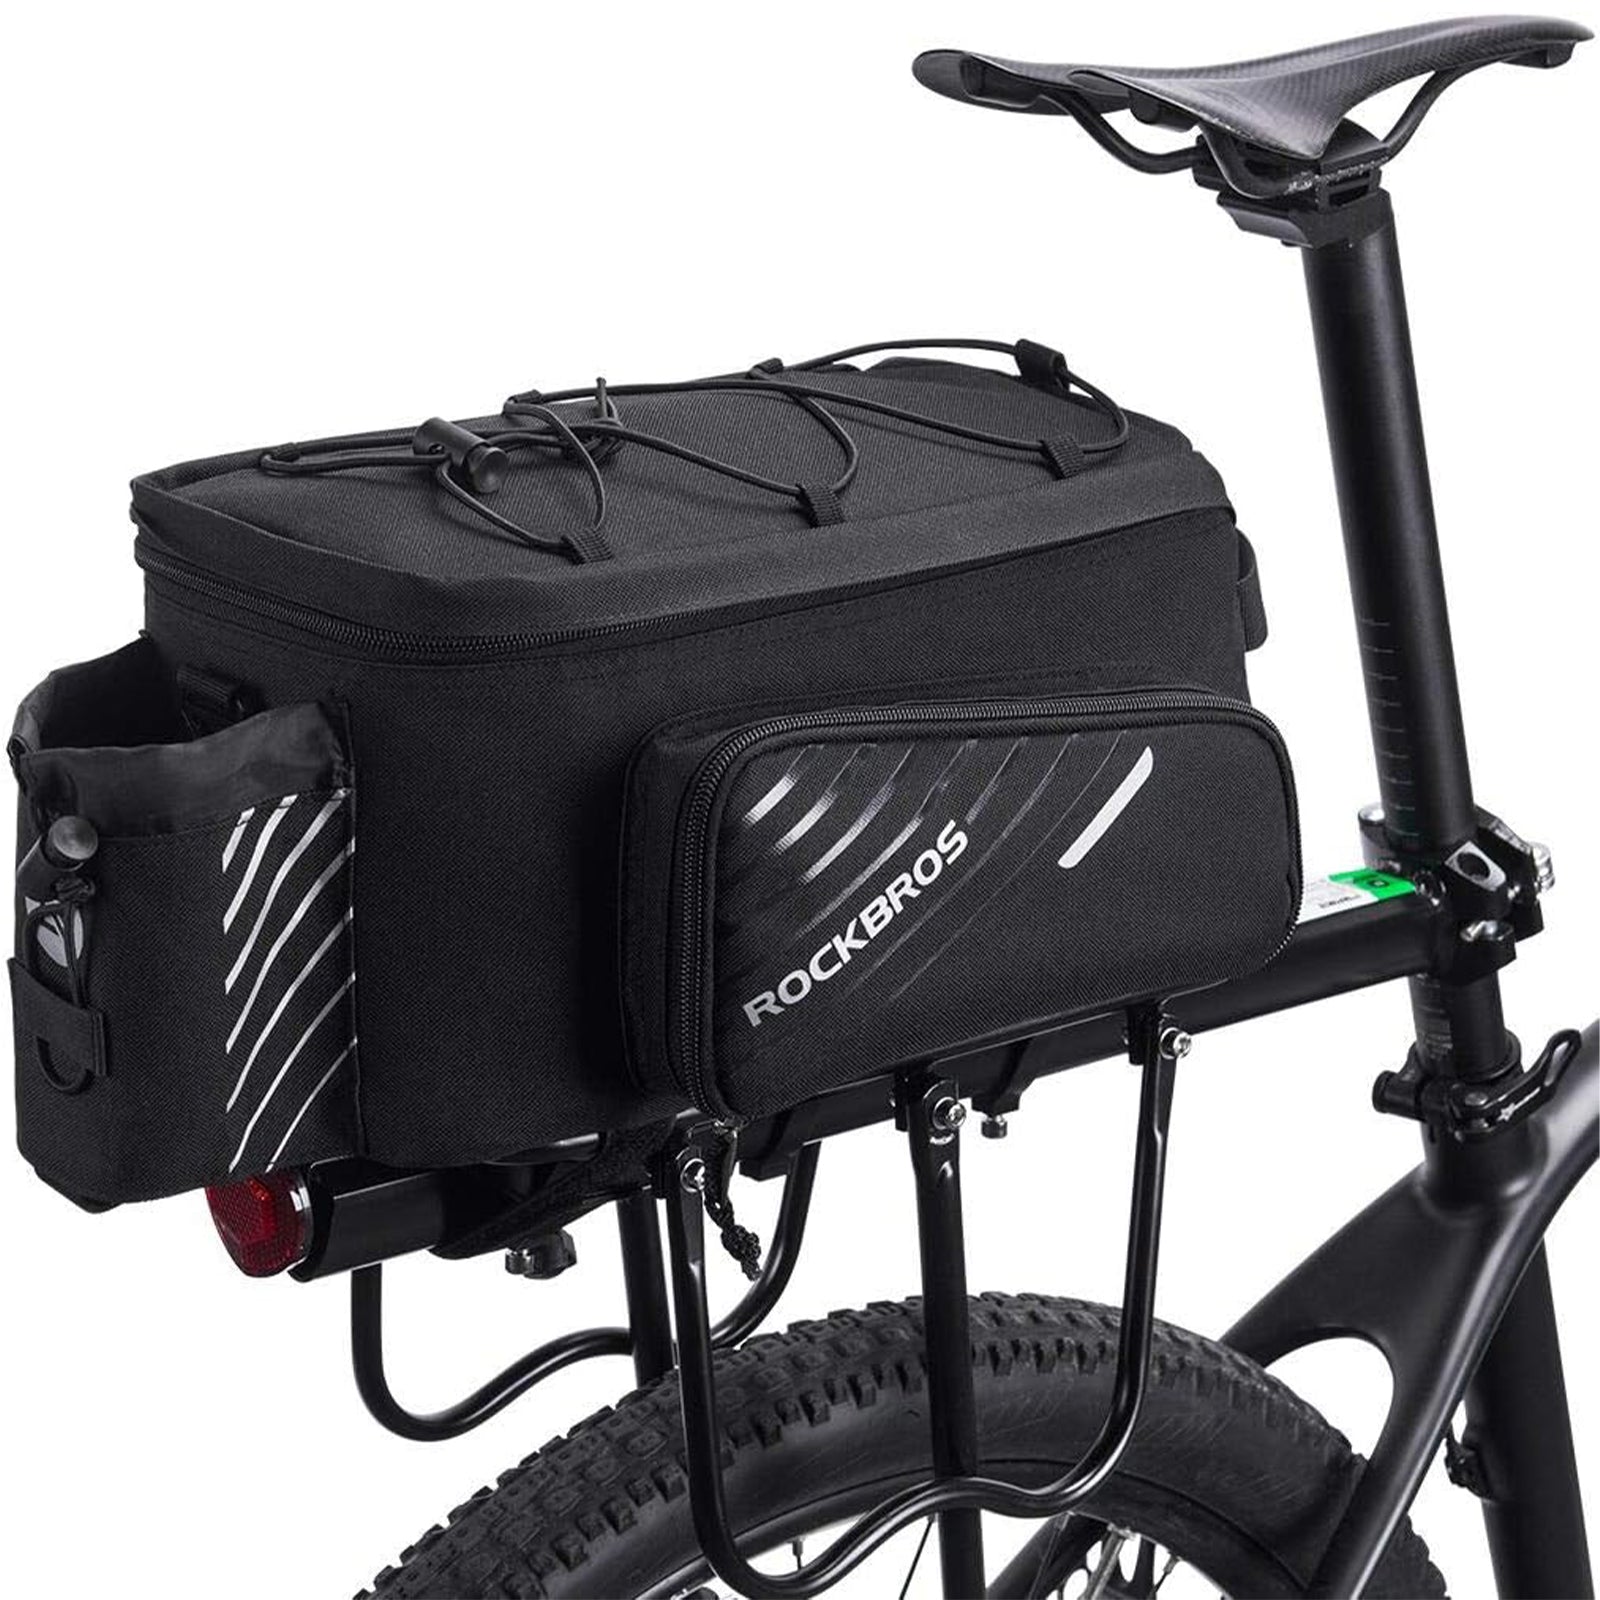 ROCKBROS Bike Rear Rack Bag Large Capacity Trunk Bag with Rain Cover 9-12L